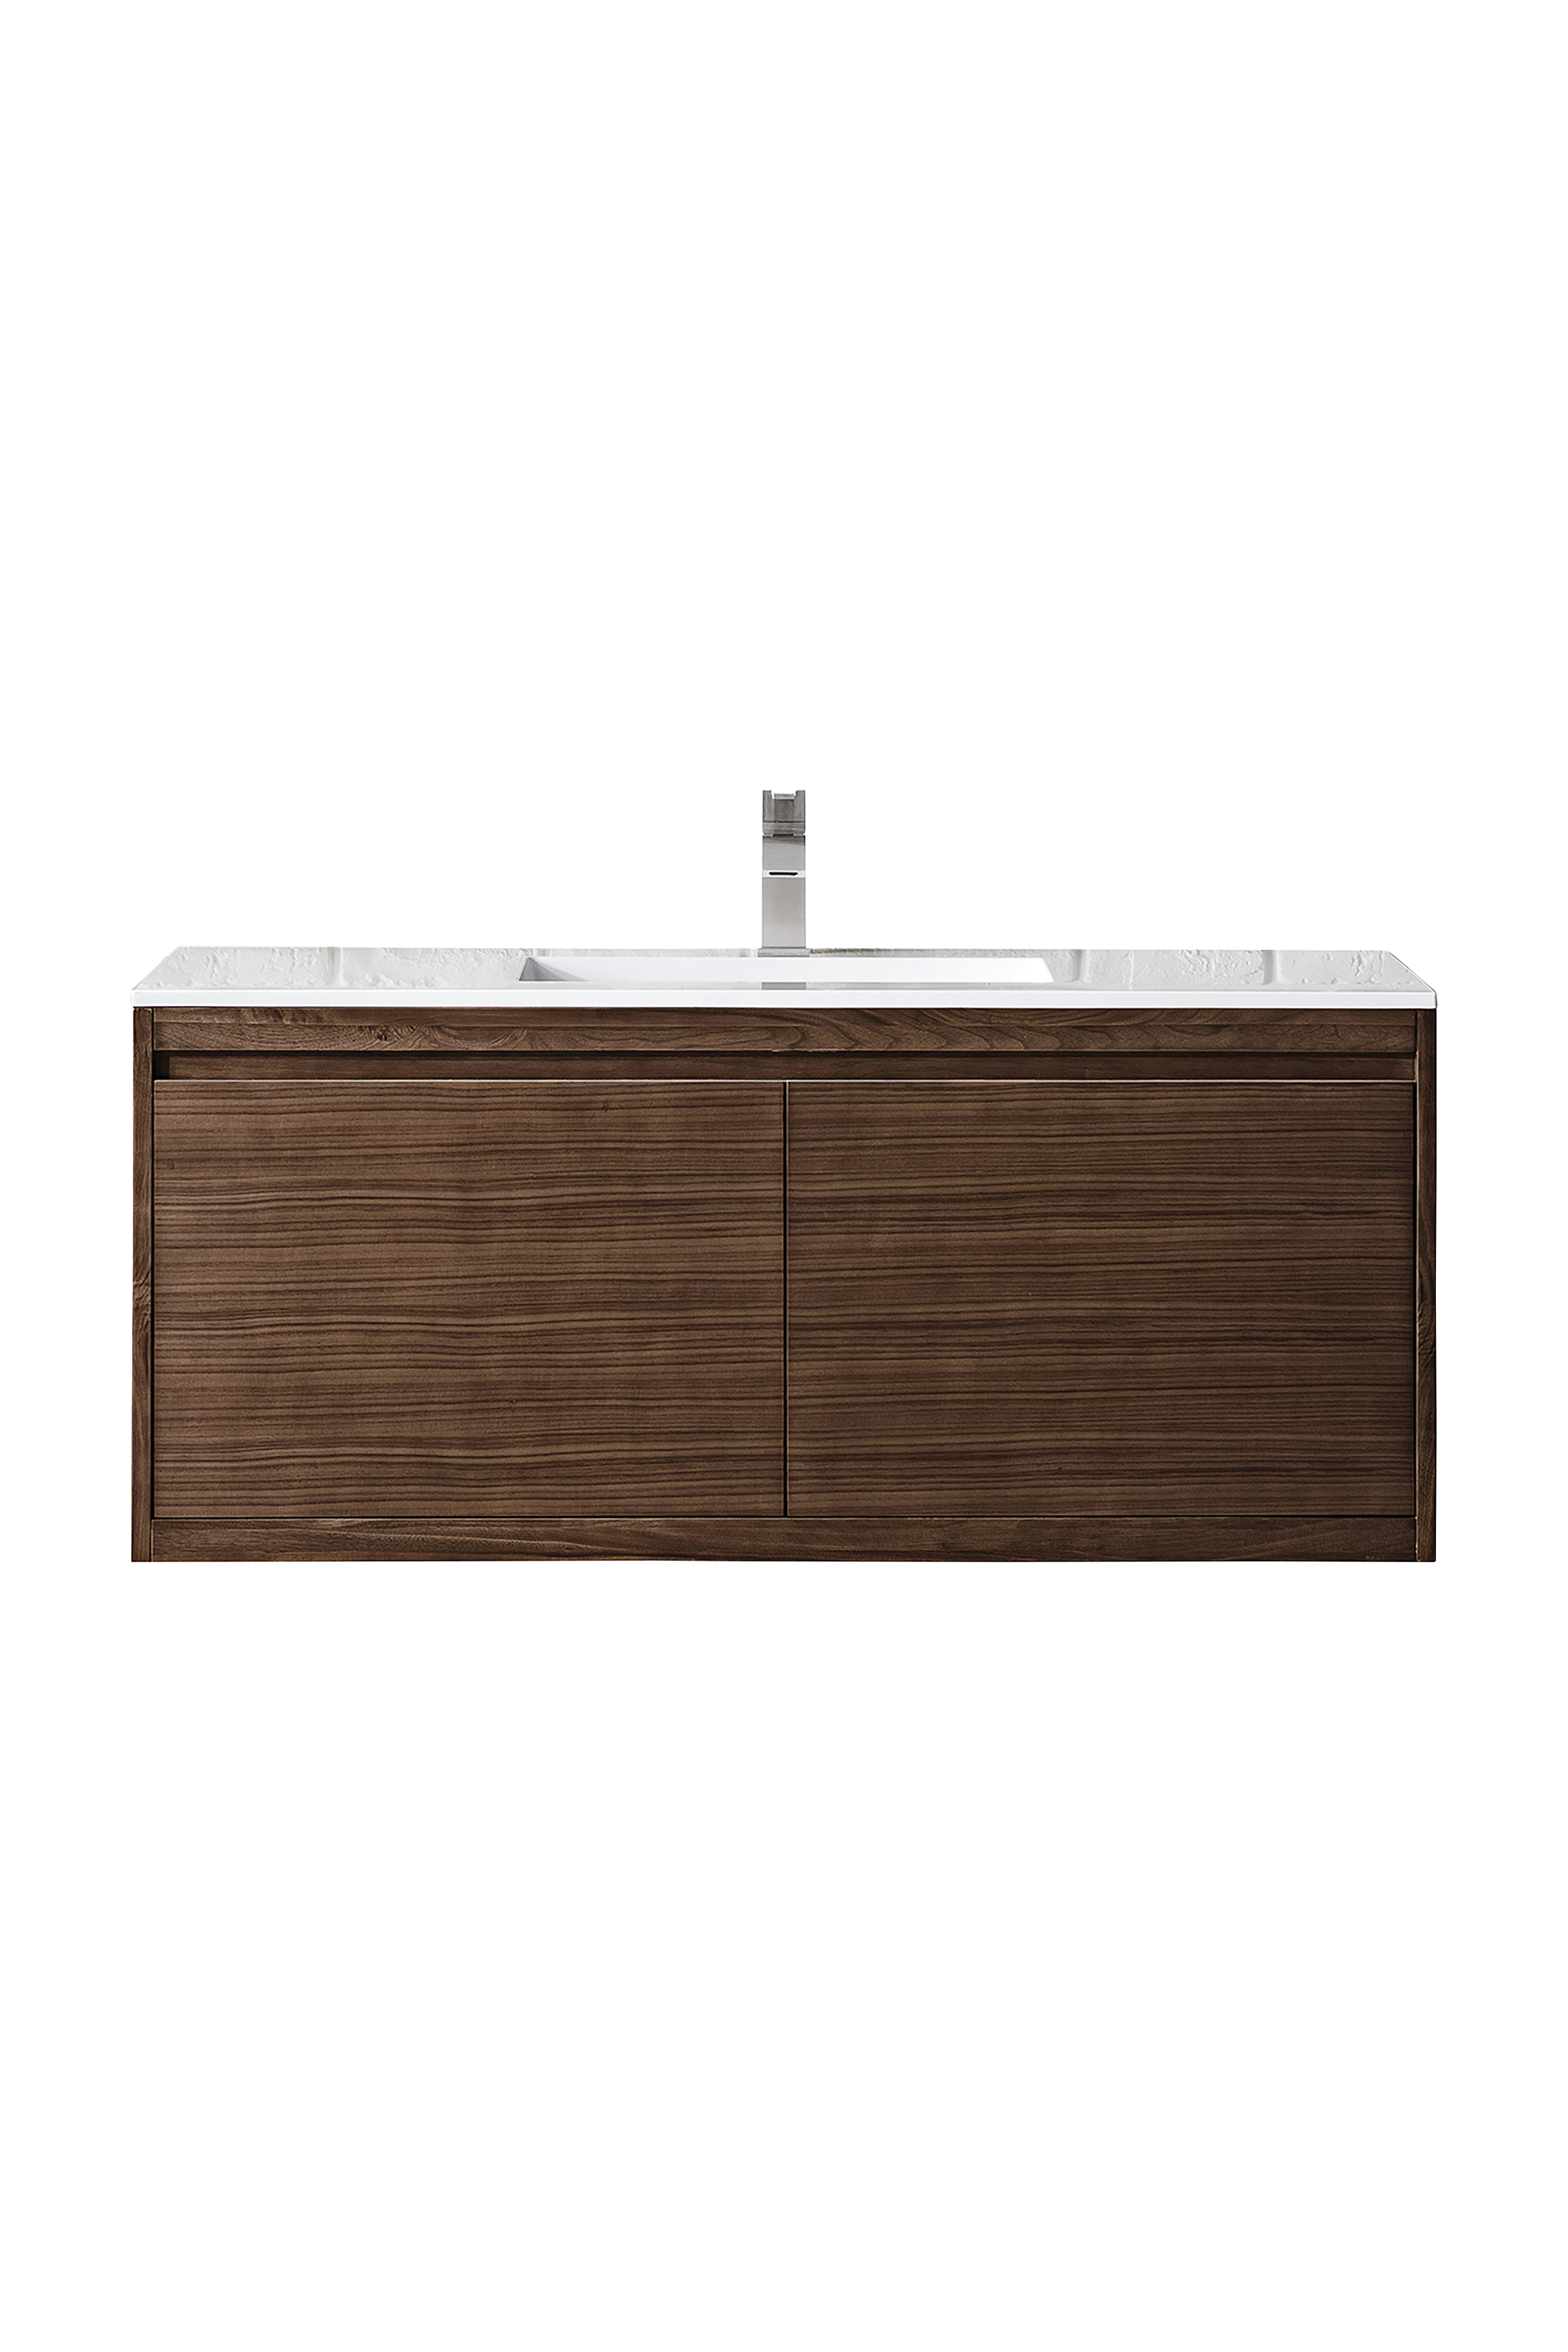 James Martin 801V47.3WLTGW Milan 47.3" Single Vanity Cabinet, Mid Century Walnut w/Glossy White Composite Top